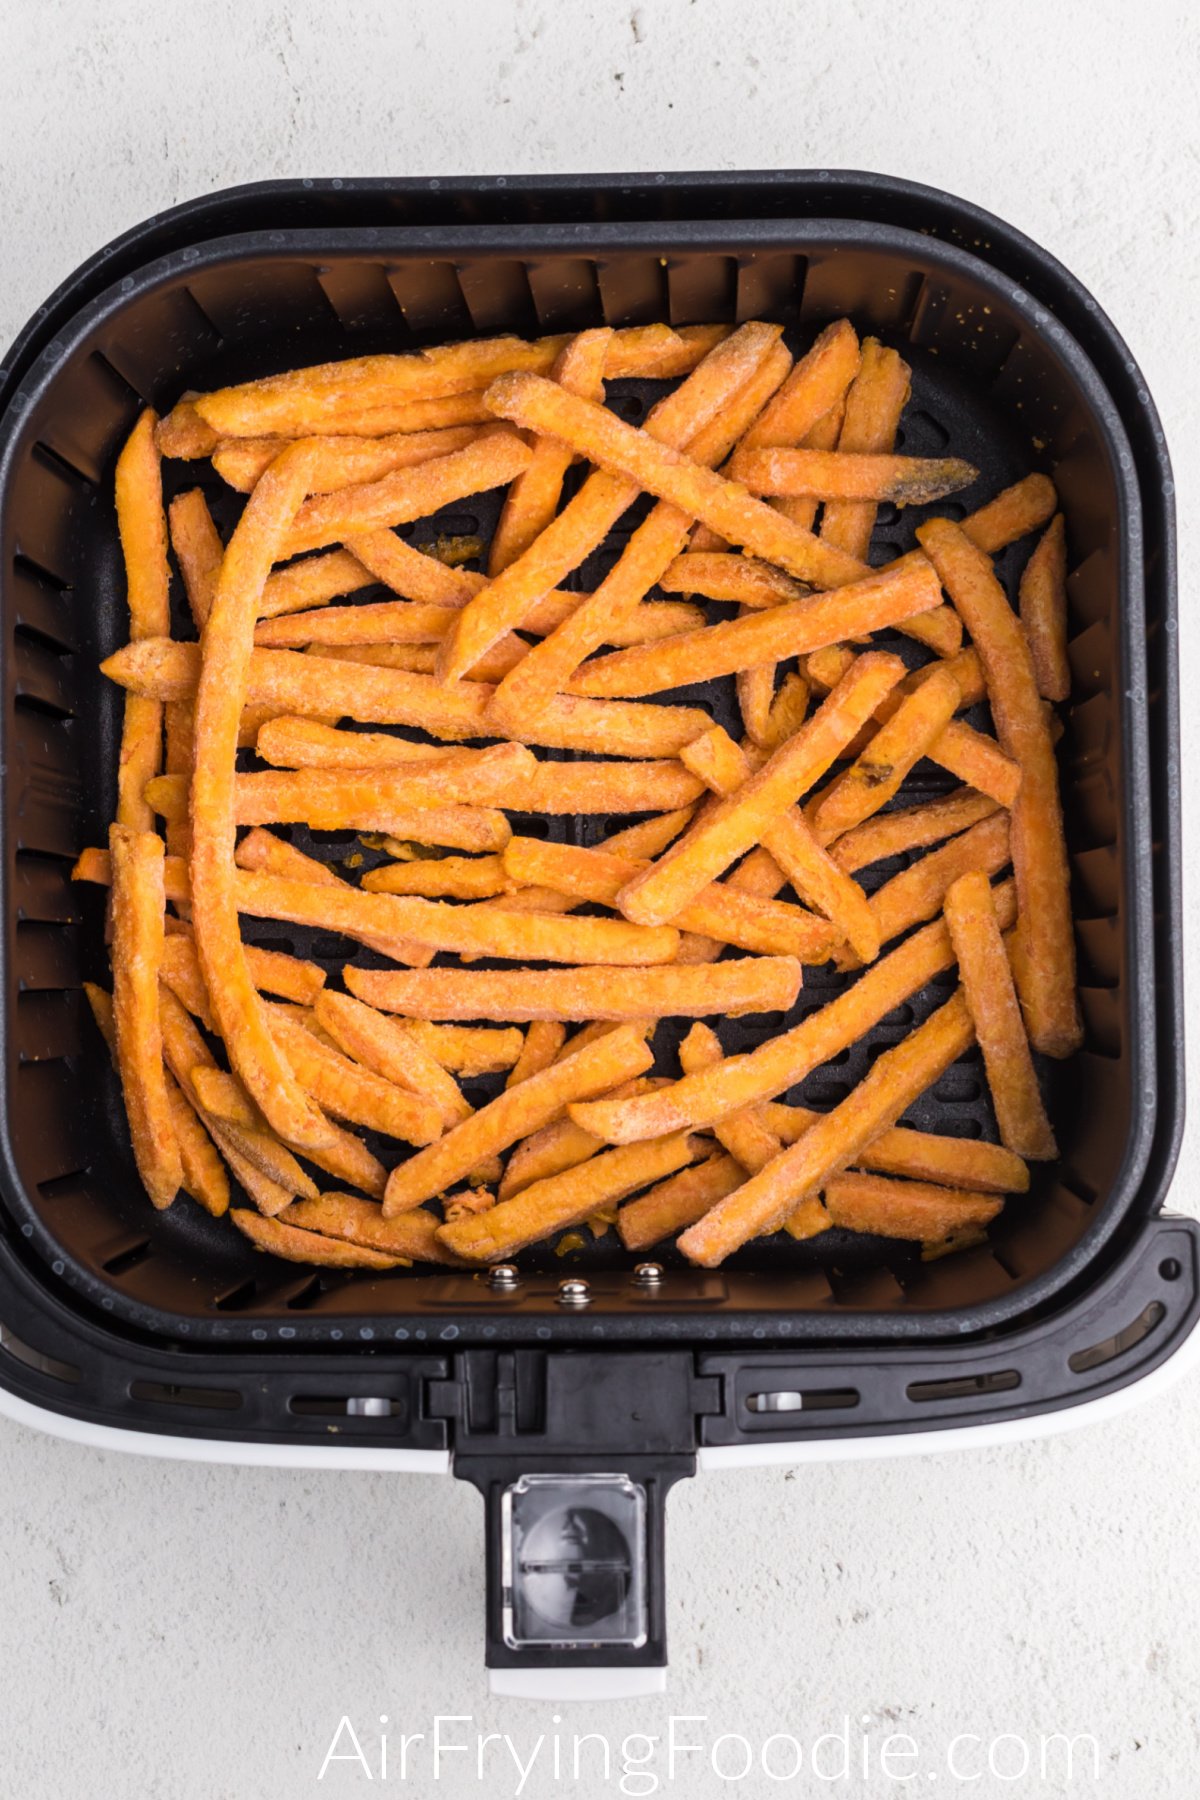 Frozen Sweet potato fries in the basket of the air fryer.